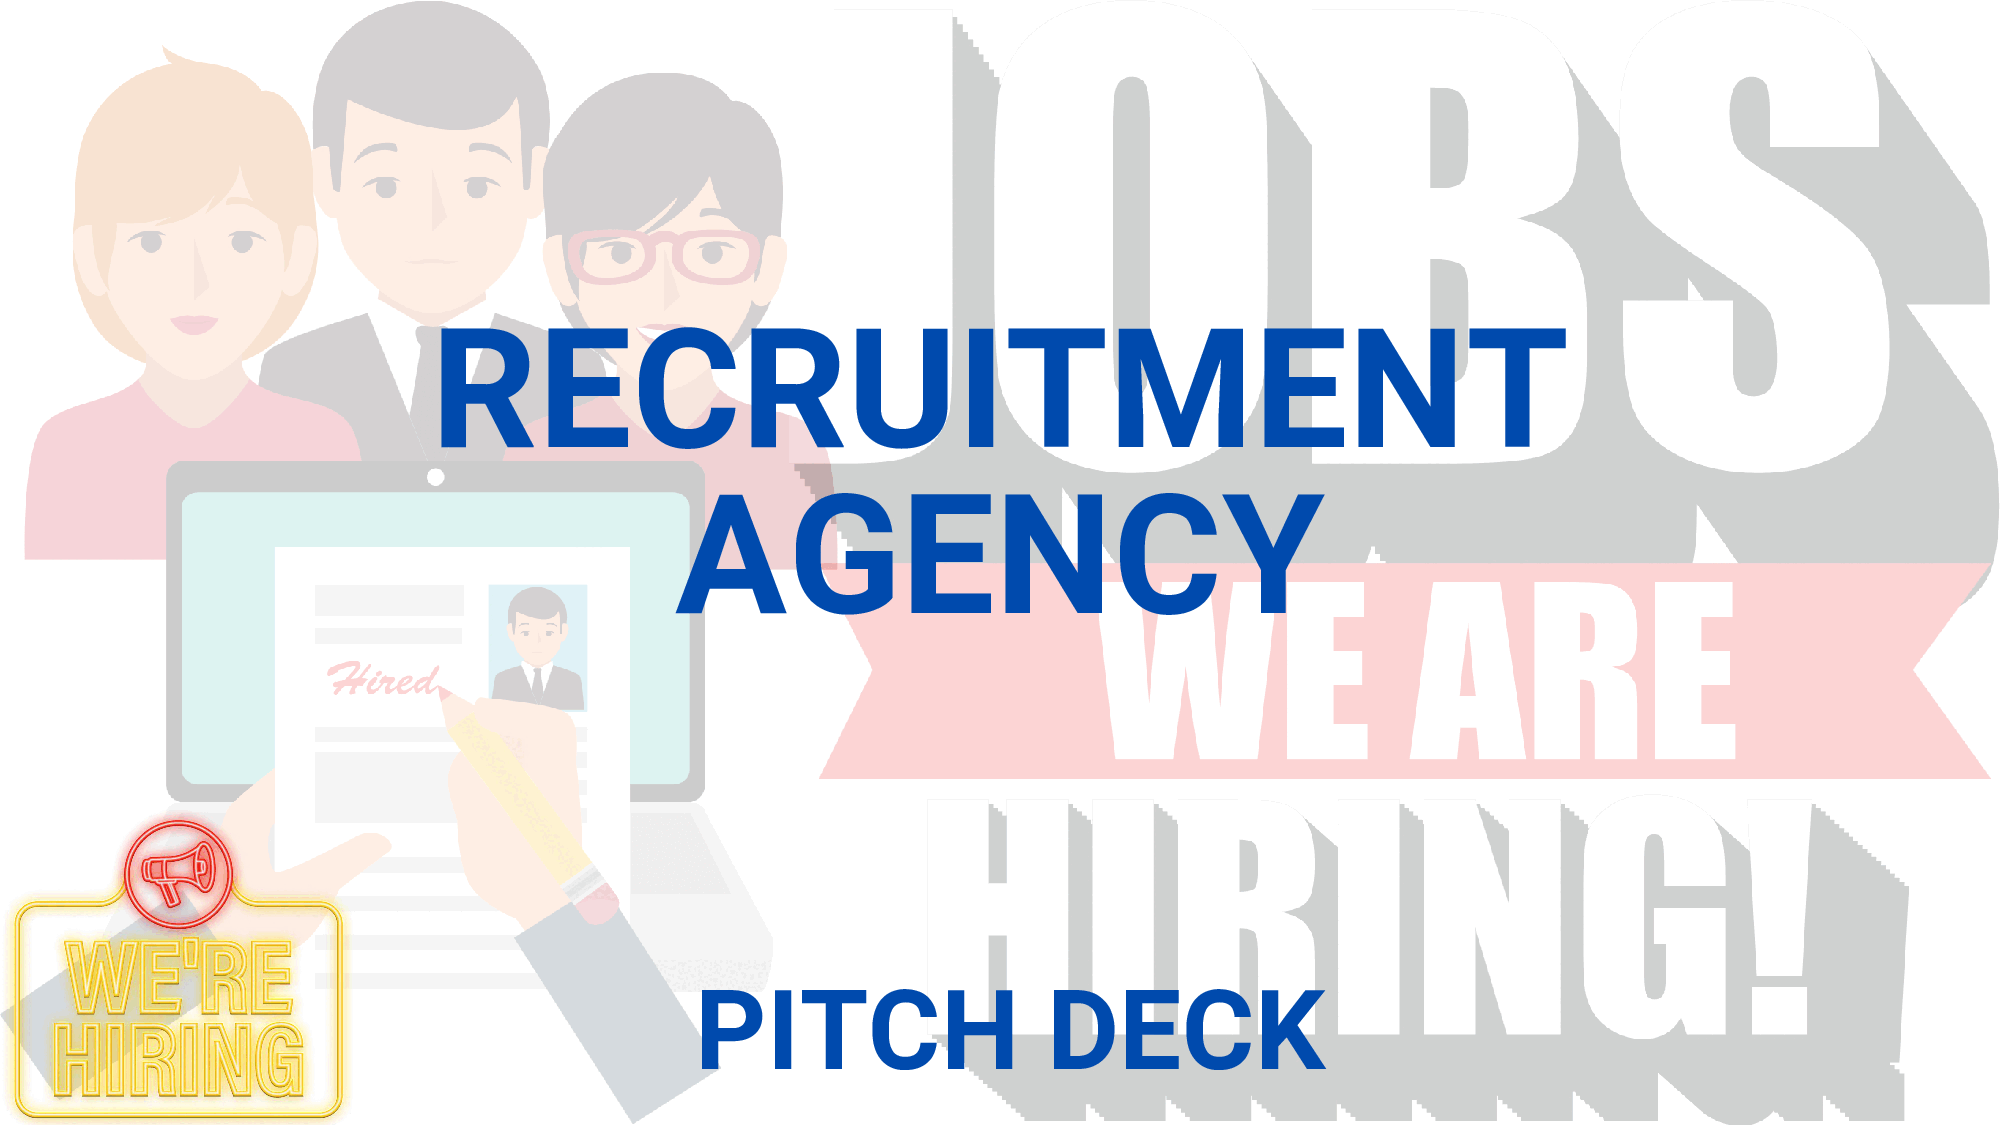 Recruitment Agency Pitch Deck